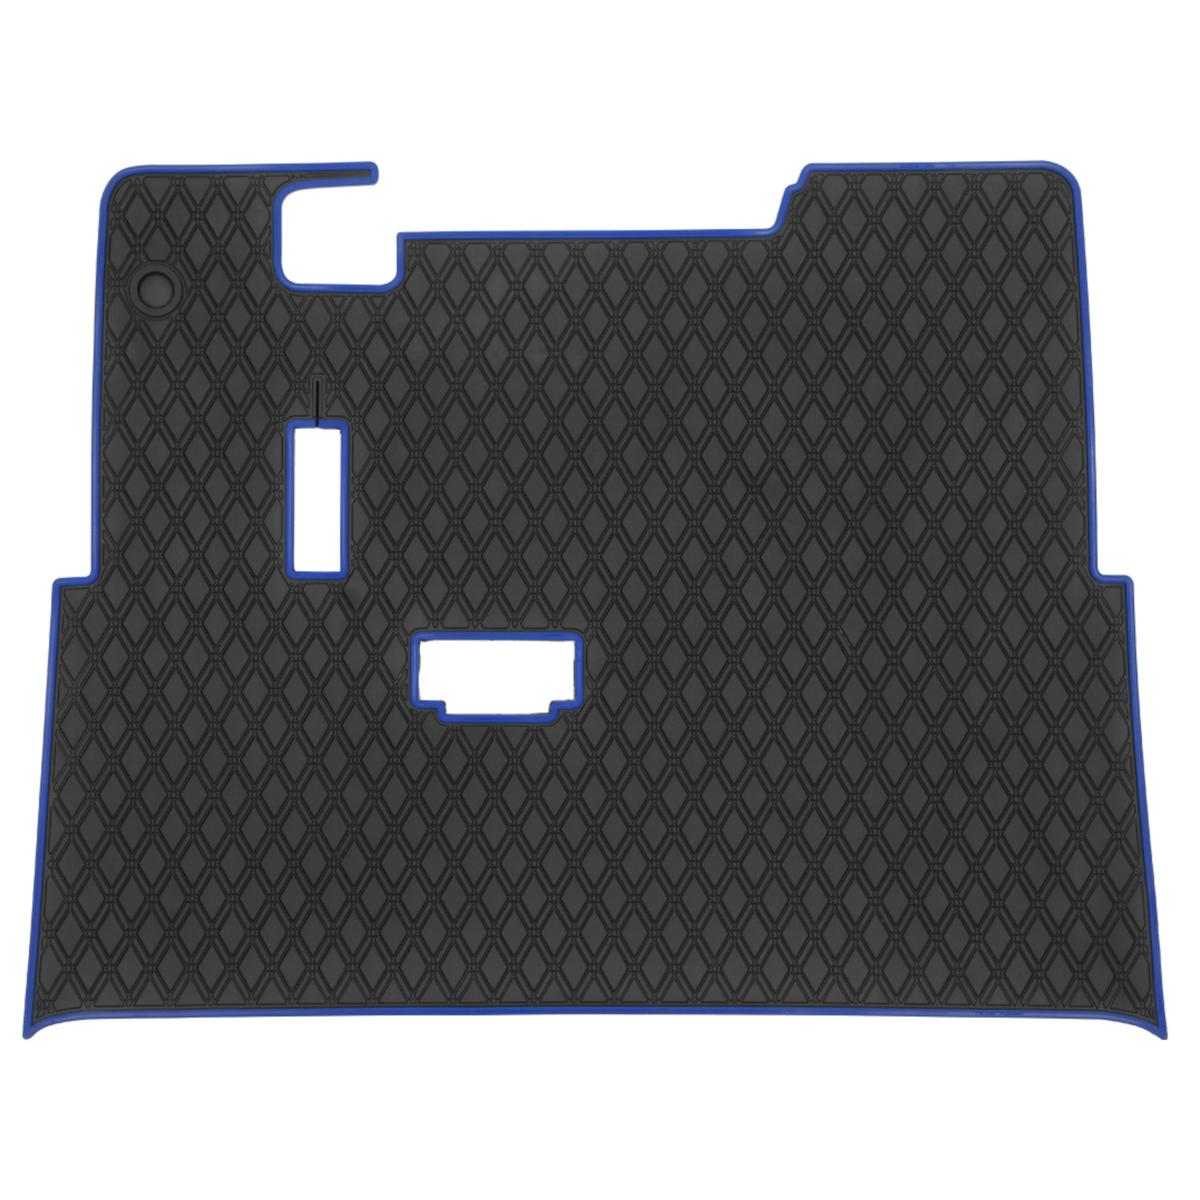 Xtreme Floor Mats for EZGO TXT / Workhorse / Express S4 / Valor / Cushman / Navitas (TXT Frame) - Black/Blue